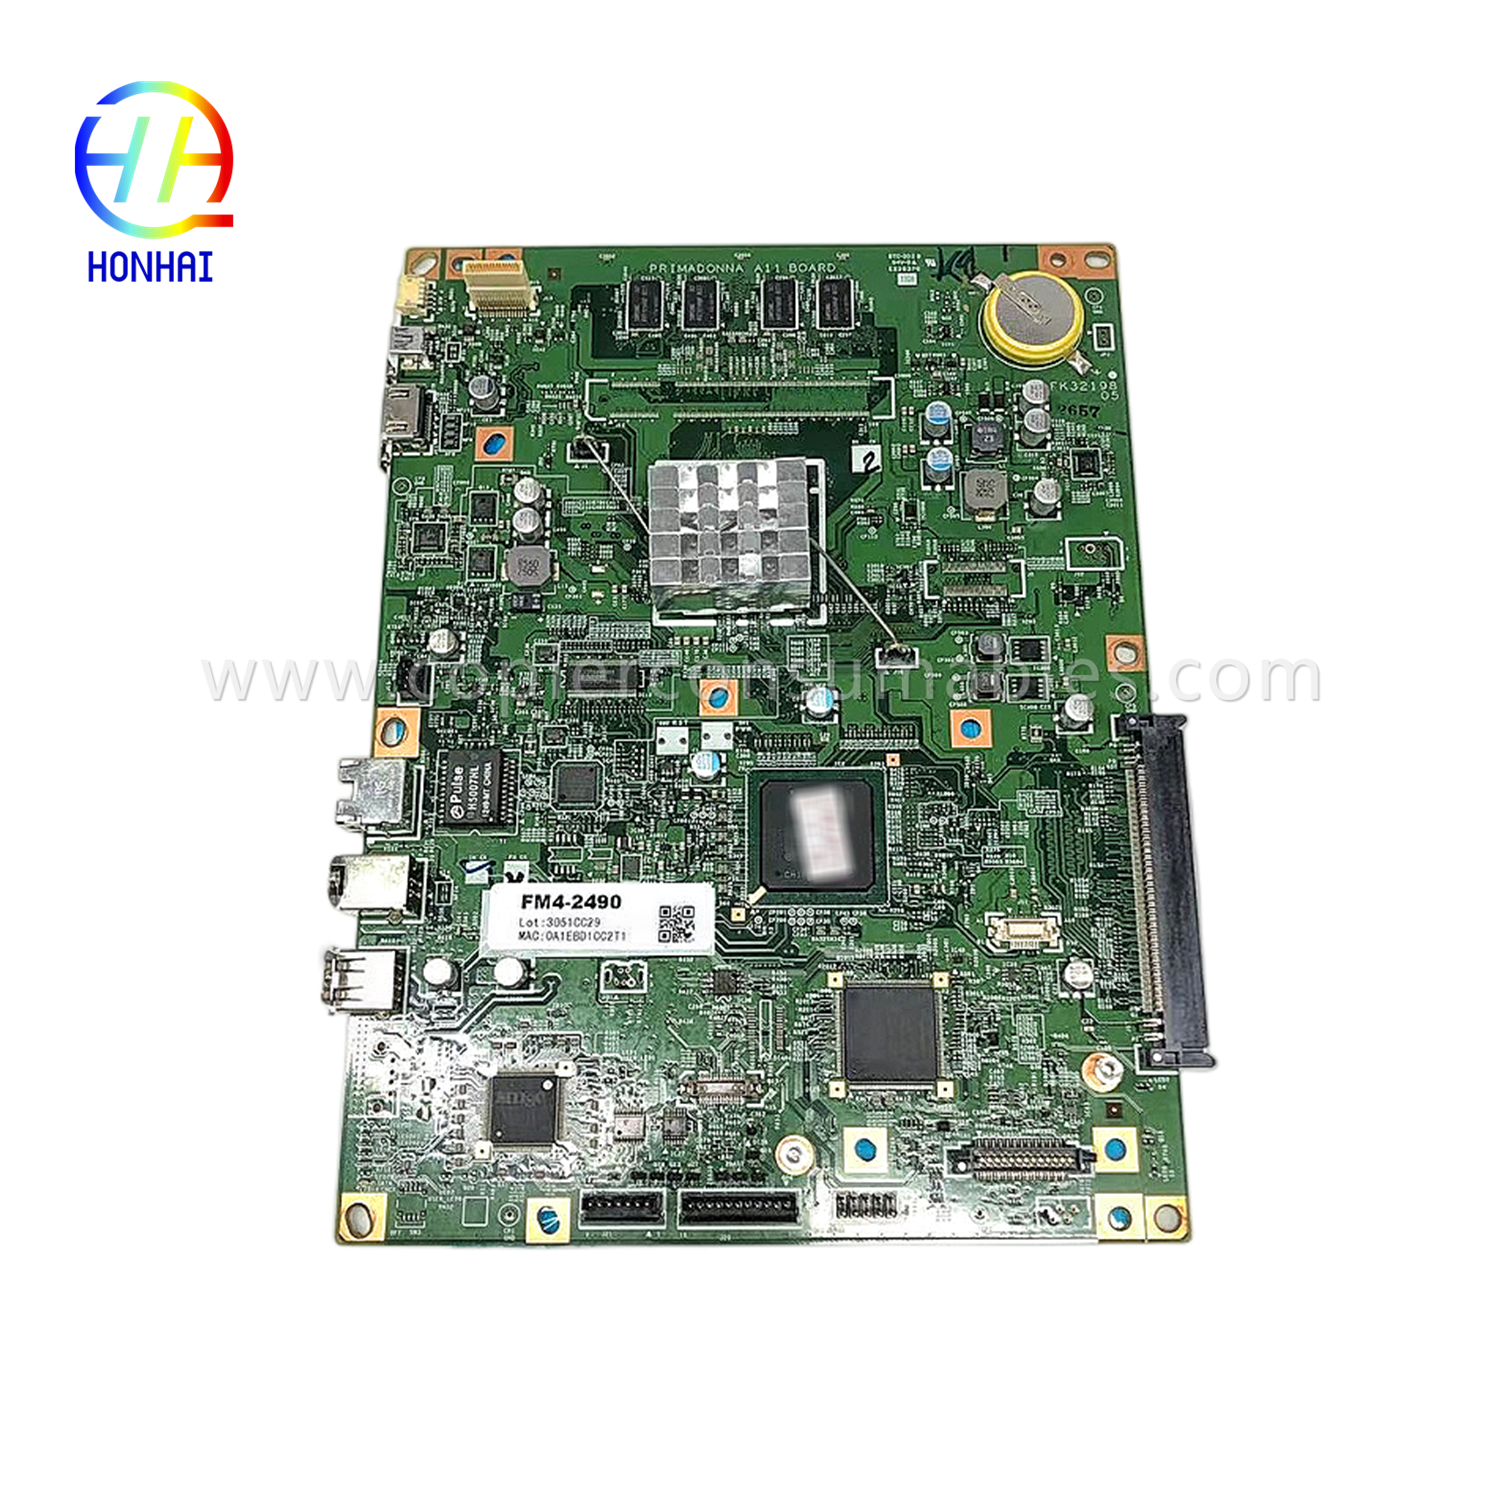 Main Controller PCB Board for Canon IR Adv 8285 OEM (FM4-2490-000) (1)